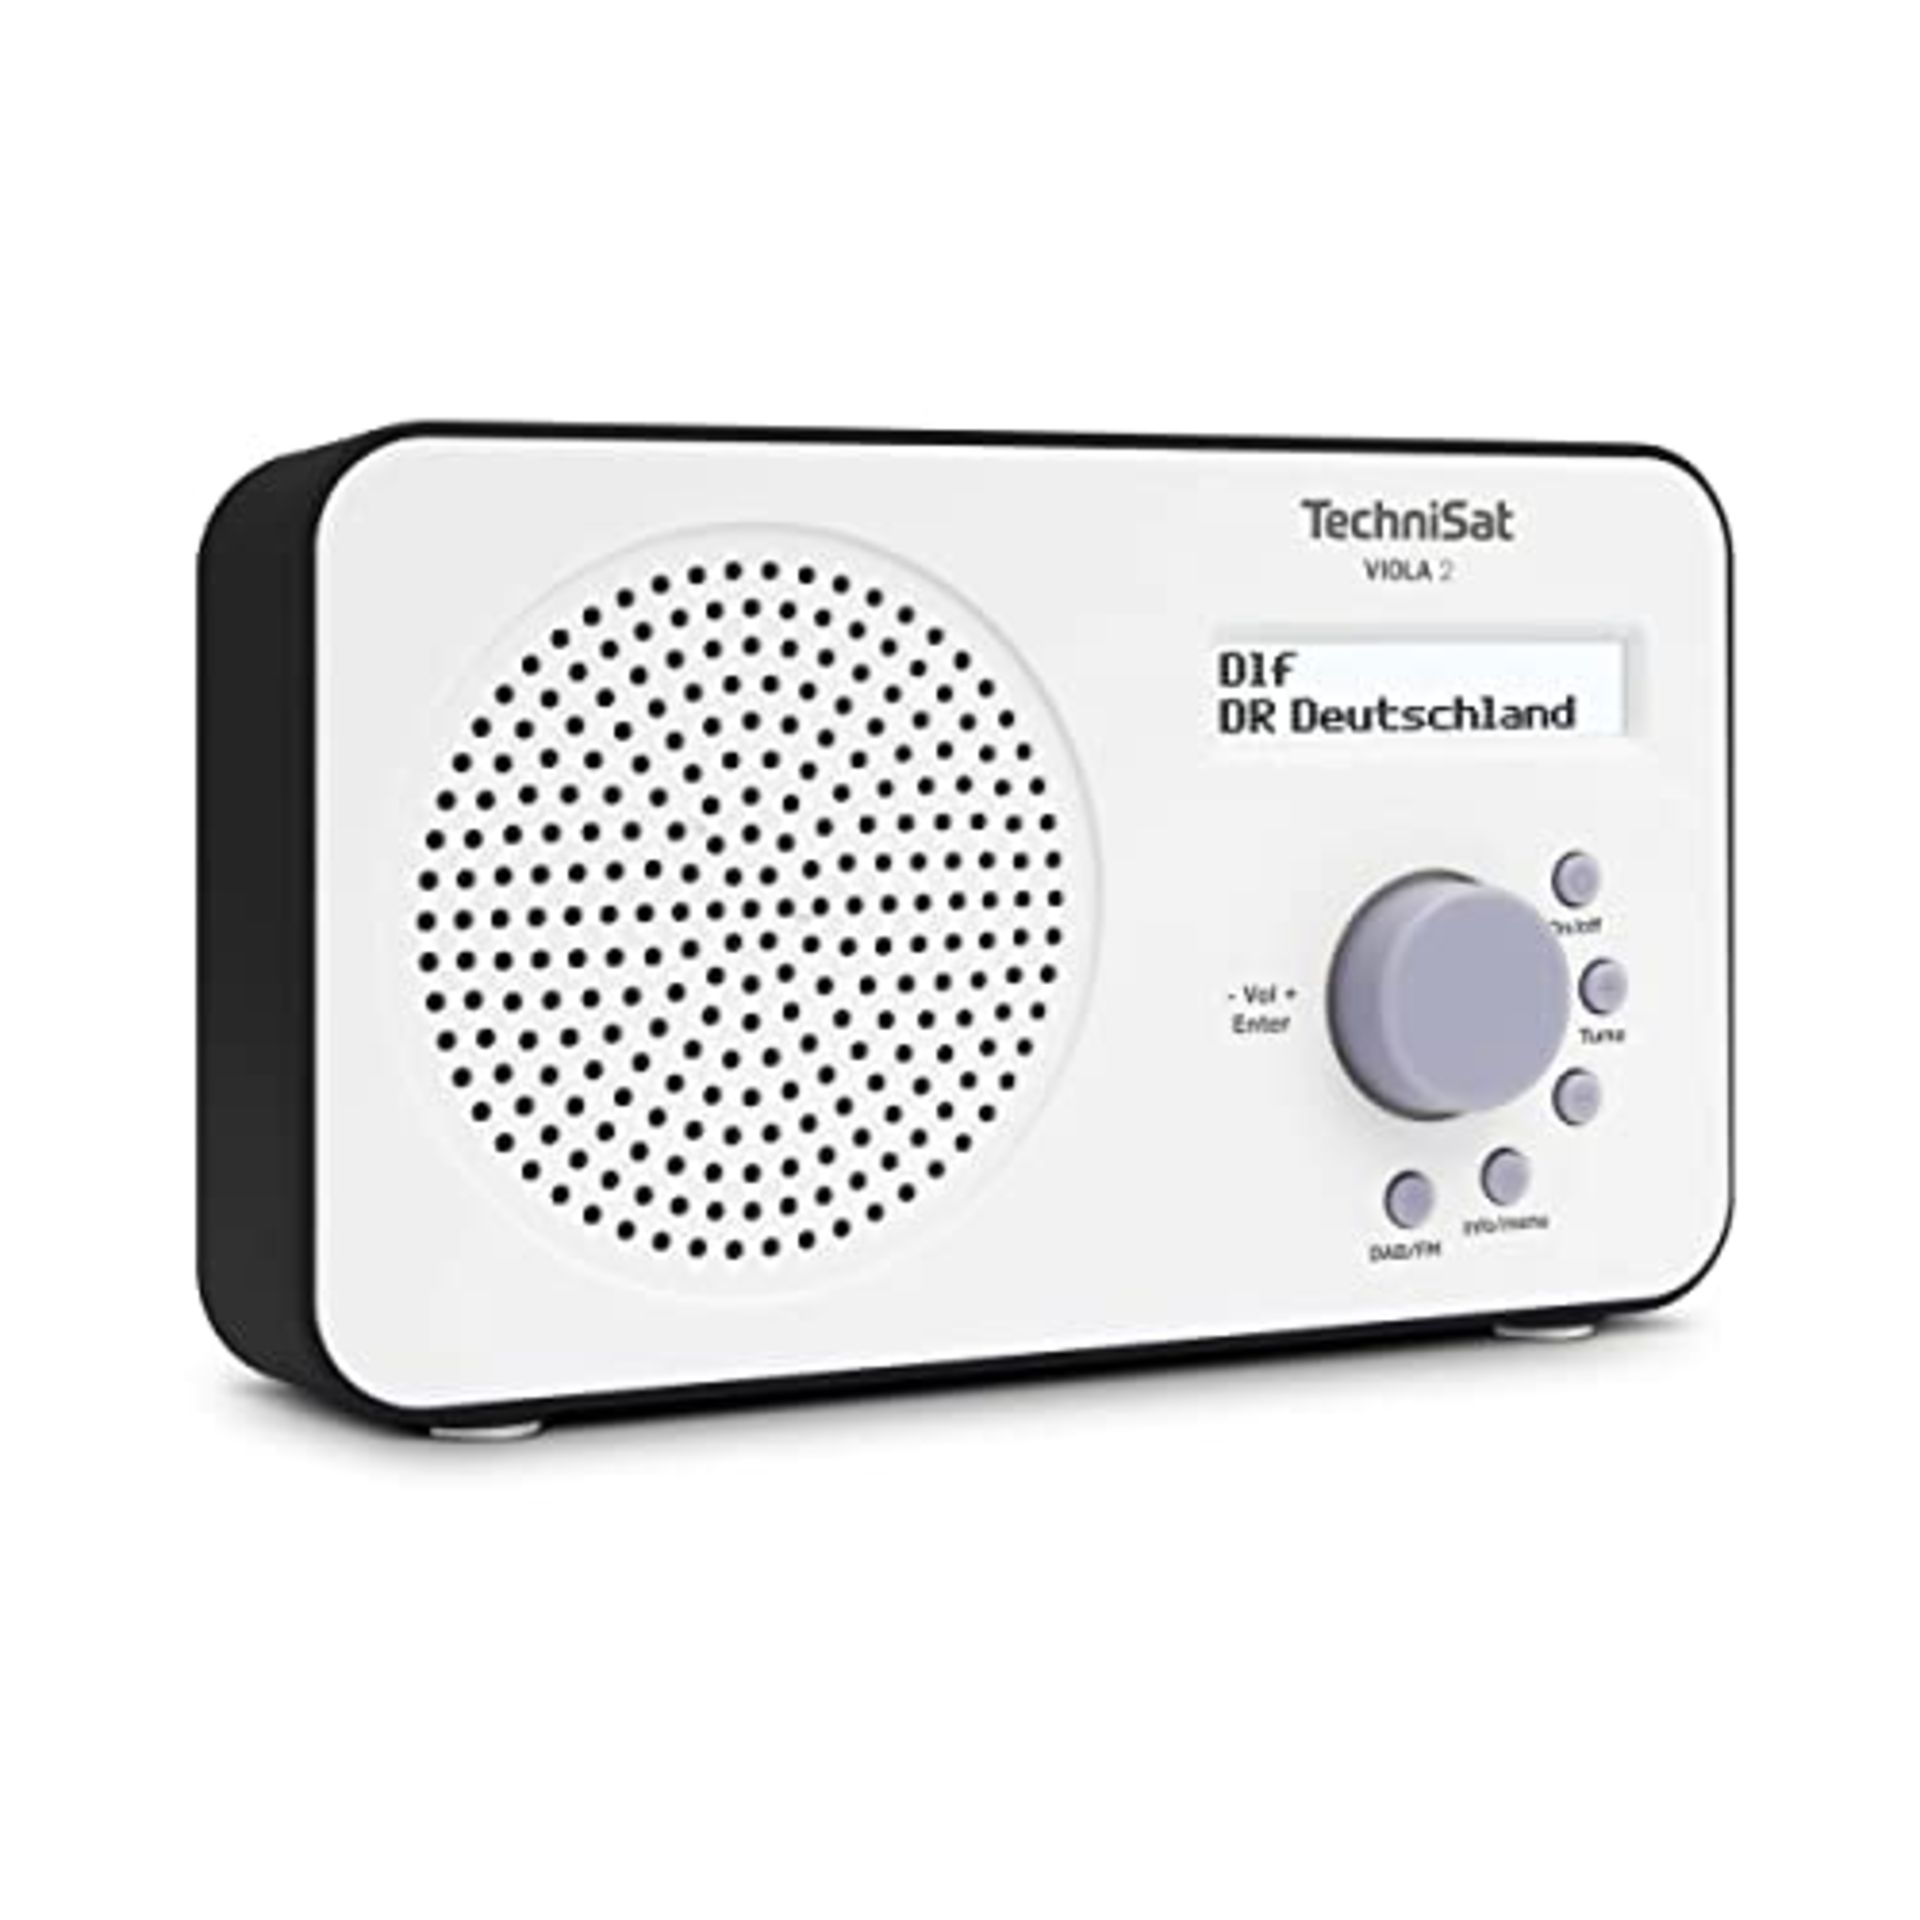 TechniSat VIOLA 2 - portable DAB radio (DAB+, FM, speaker, headphone jack, two-line di